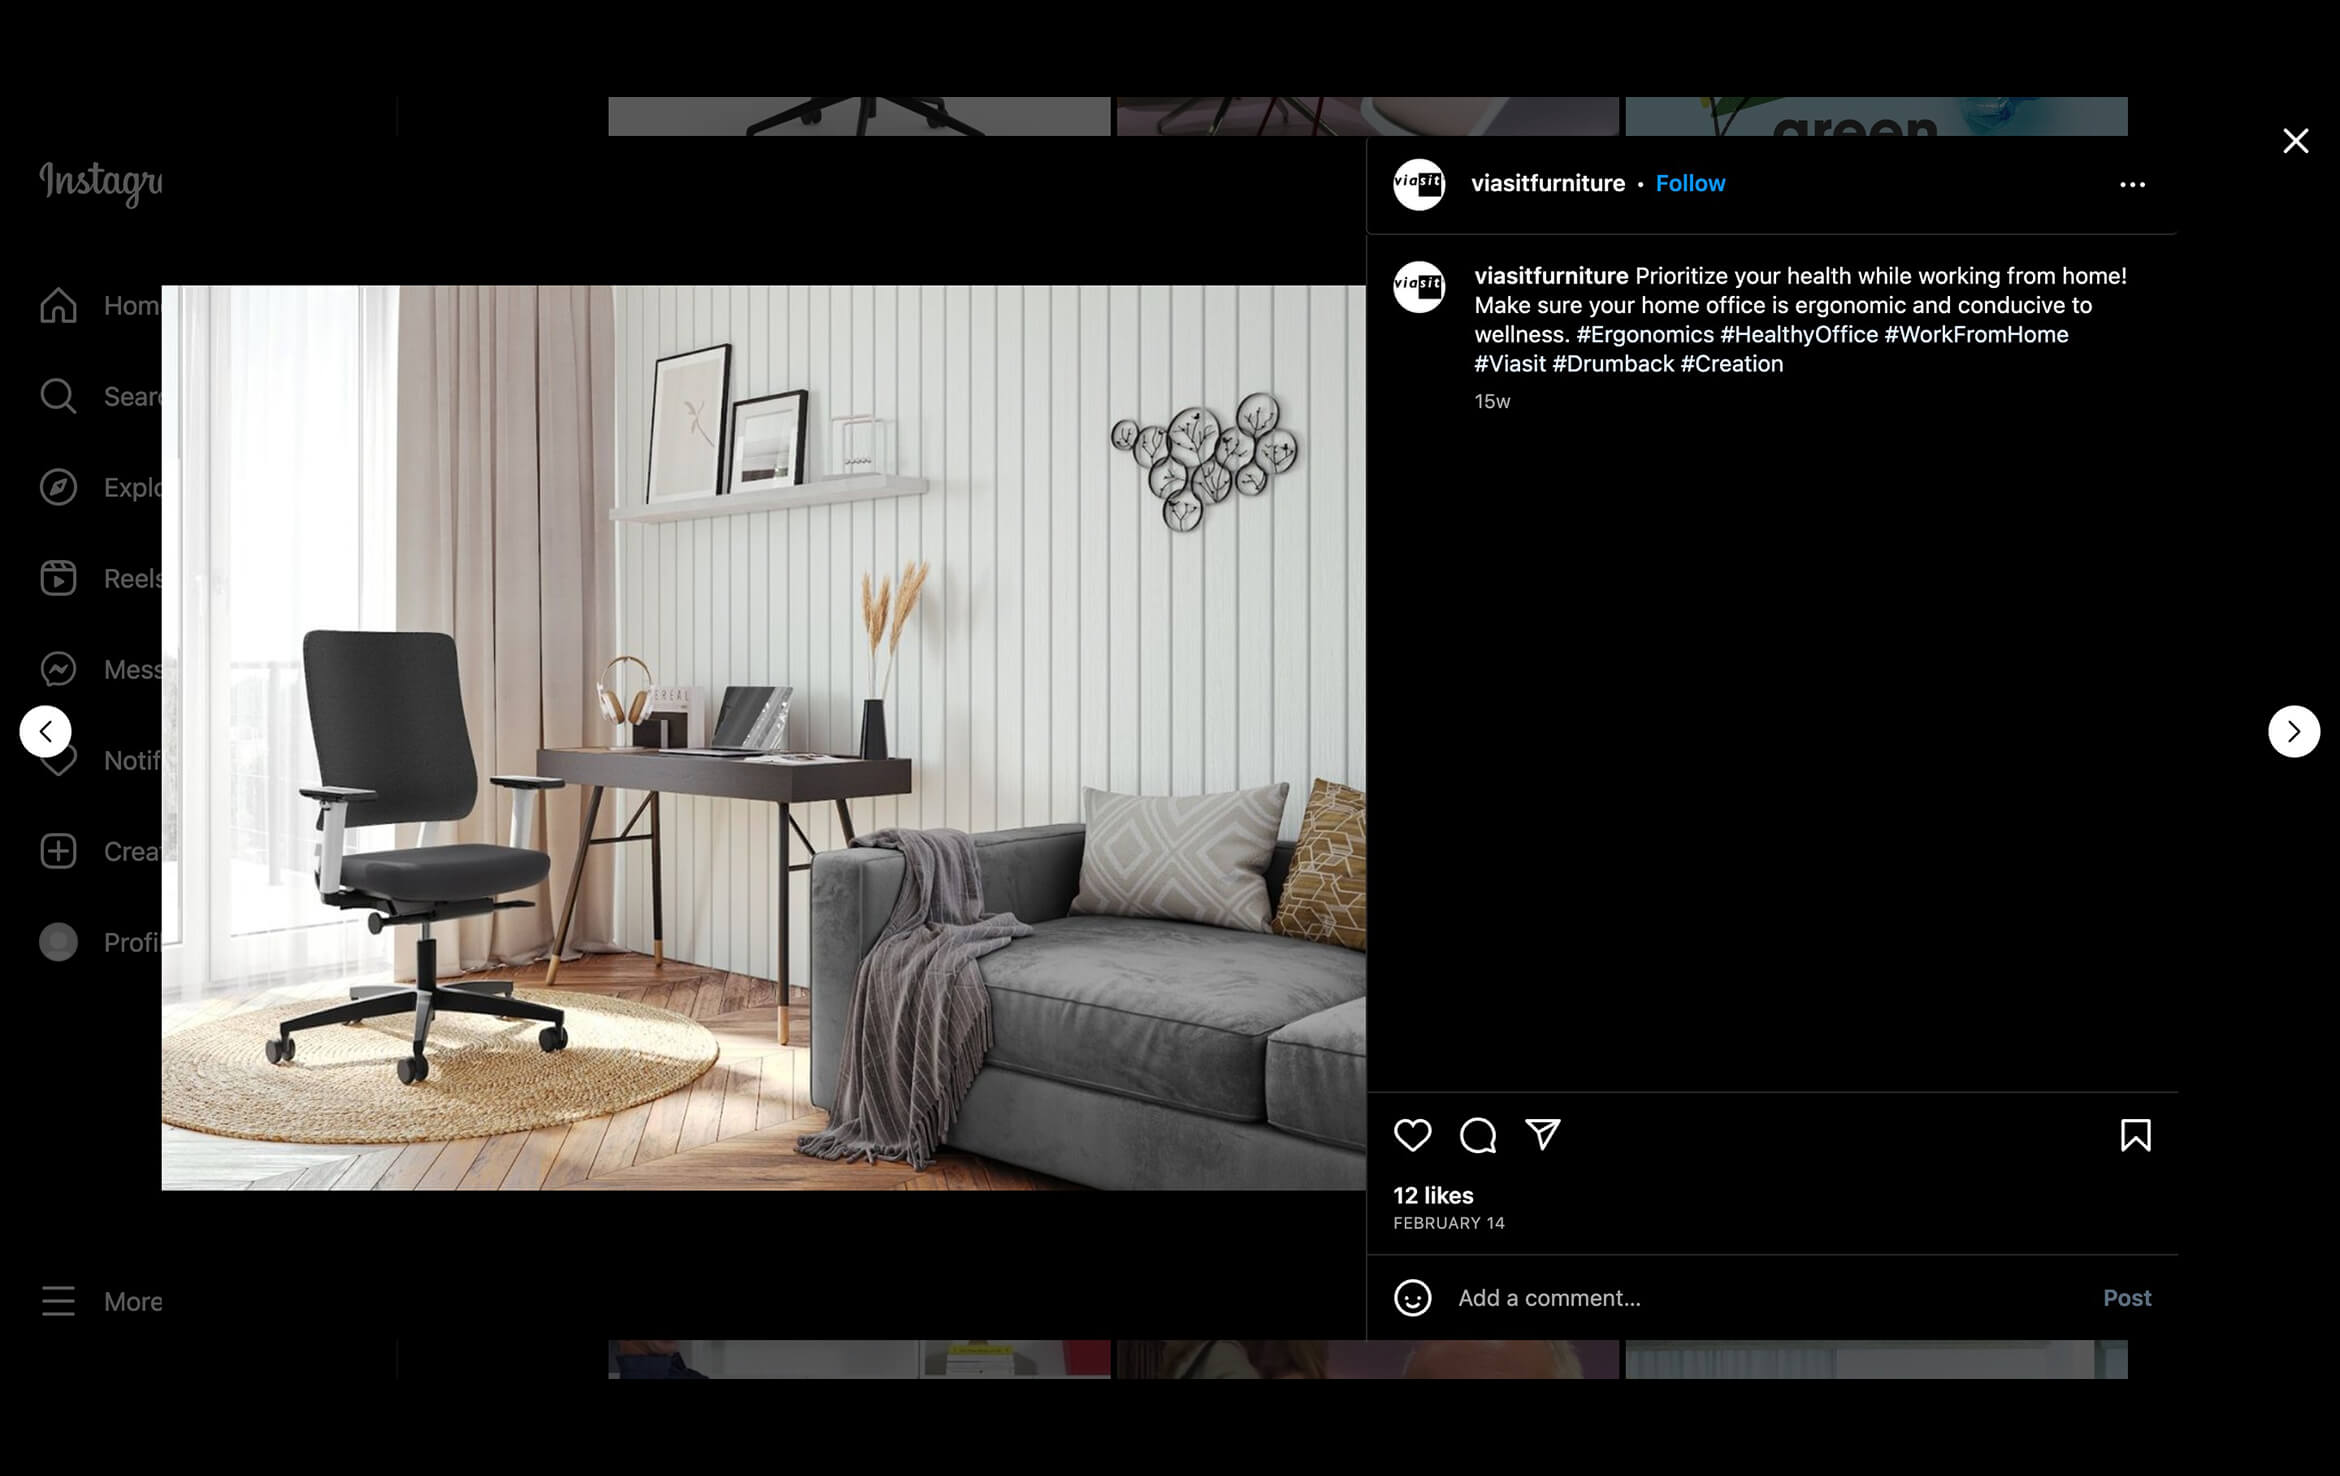 Office Furniture 3D Rendering for Instagram Posts